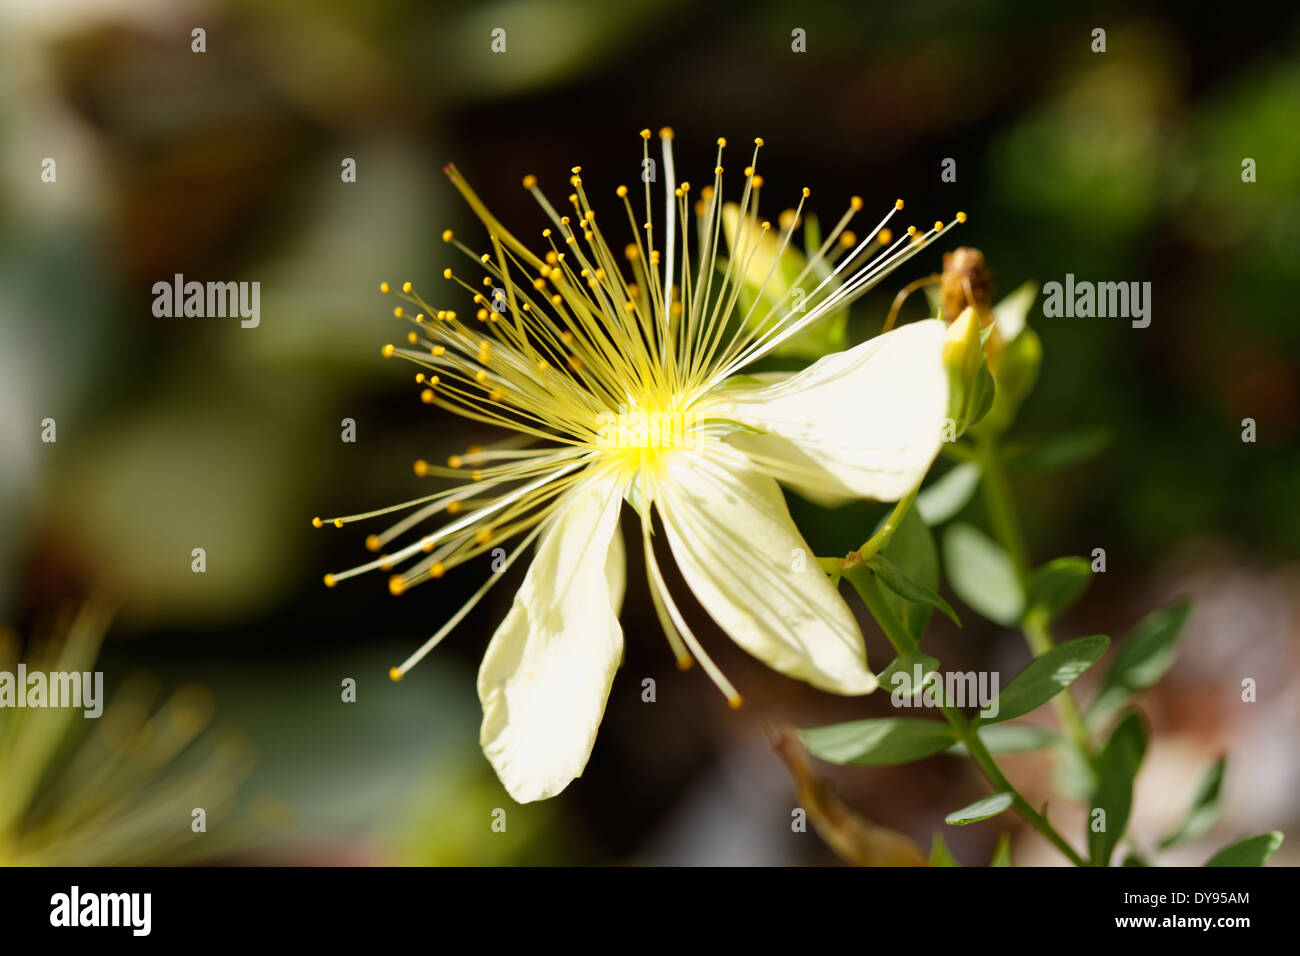 Germany, Bavaria, Tutsan (Hypericum androsaemum), close-up Stock Photo